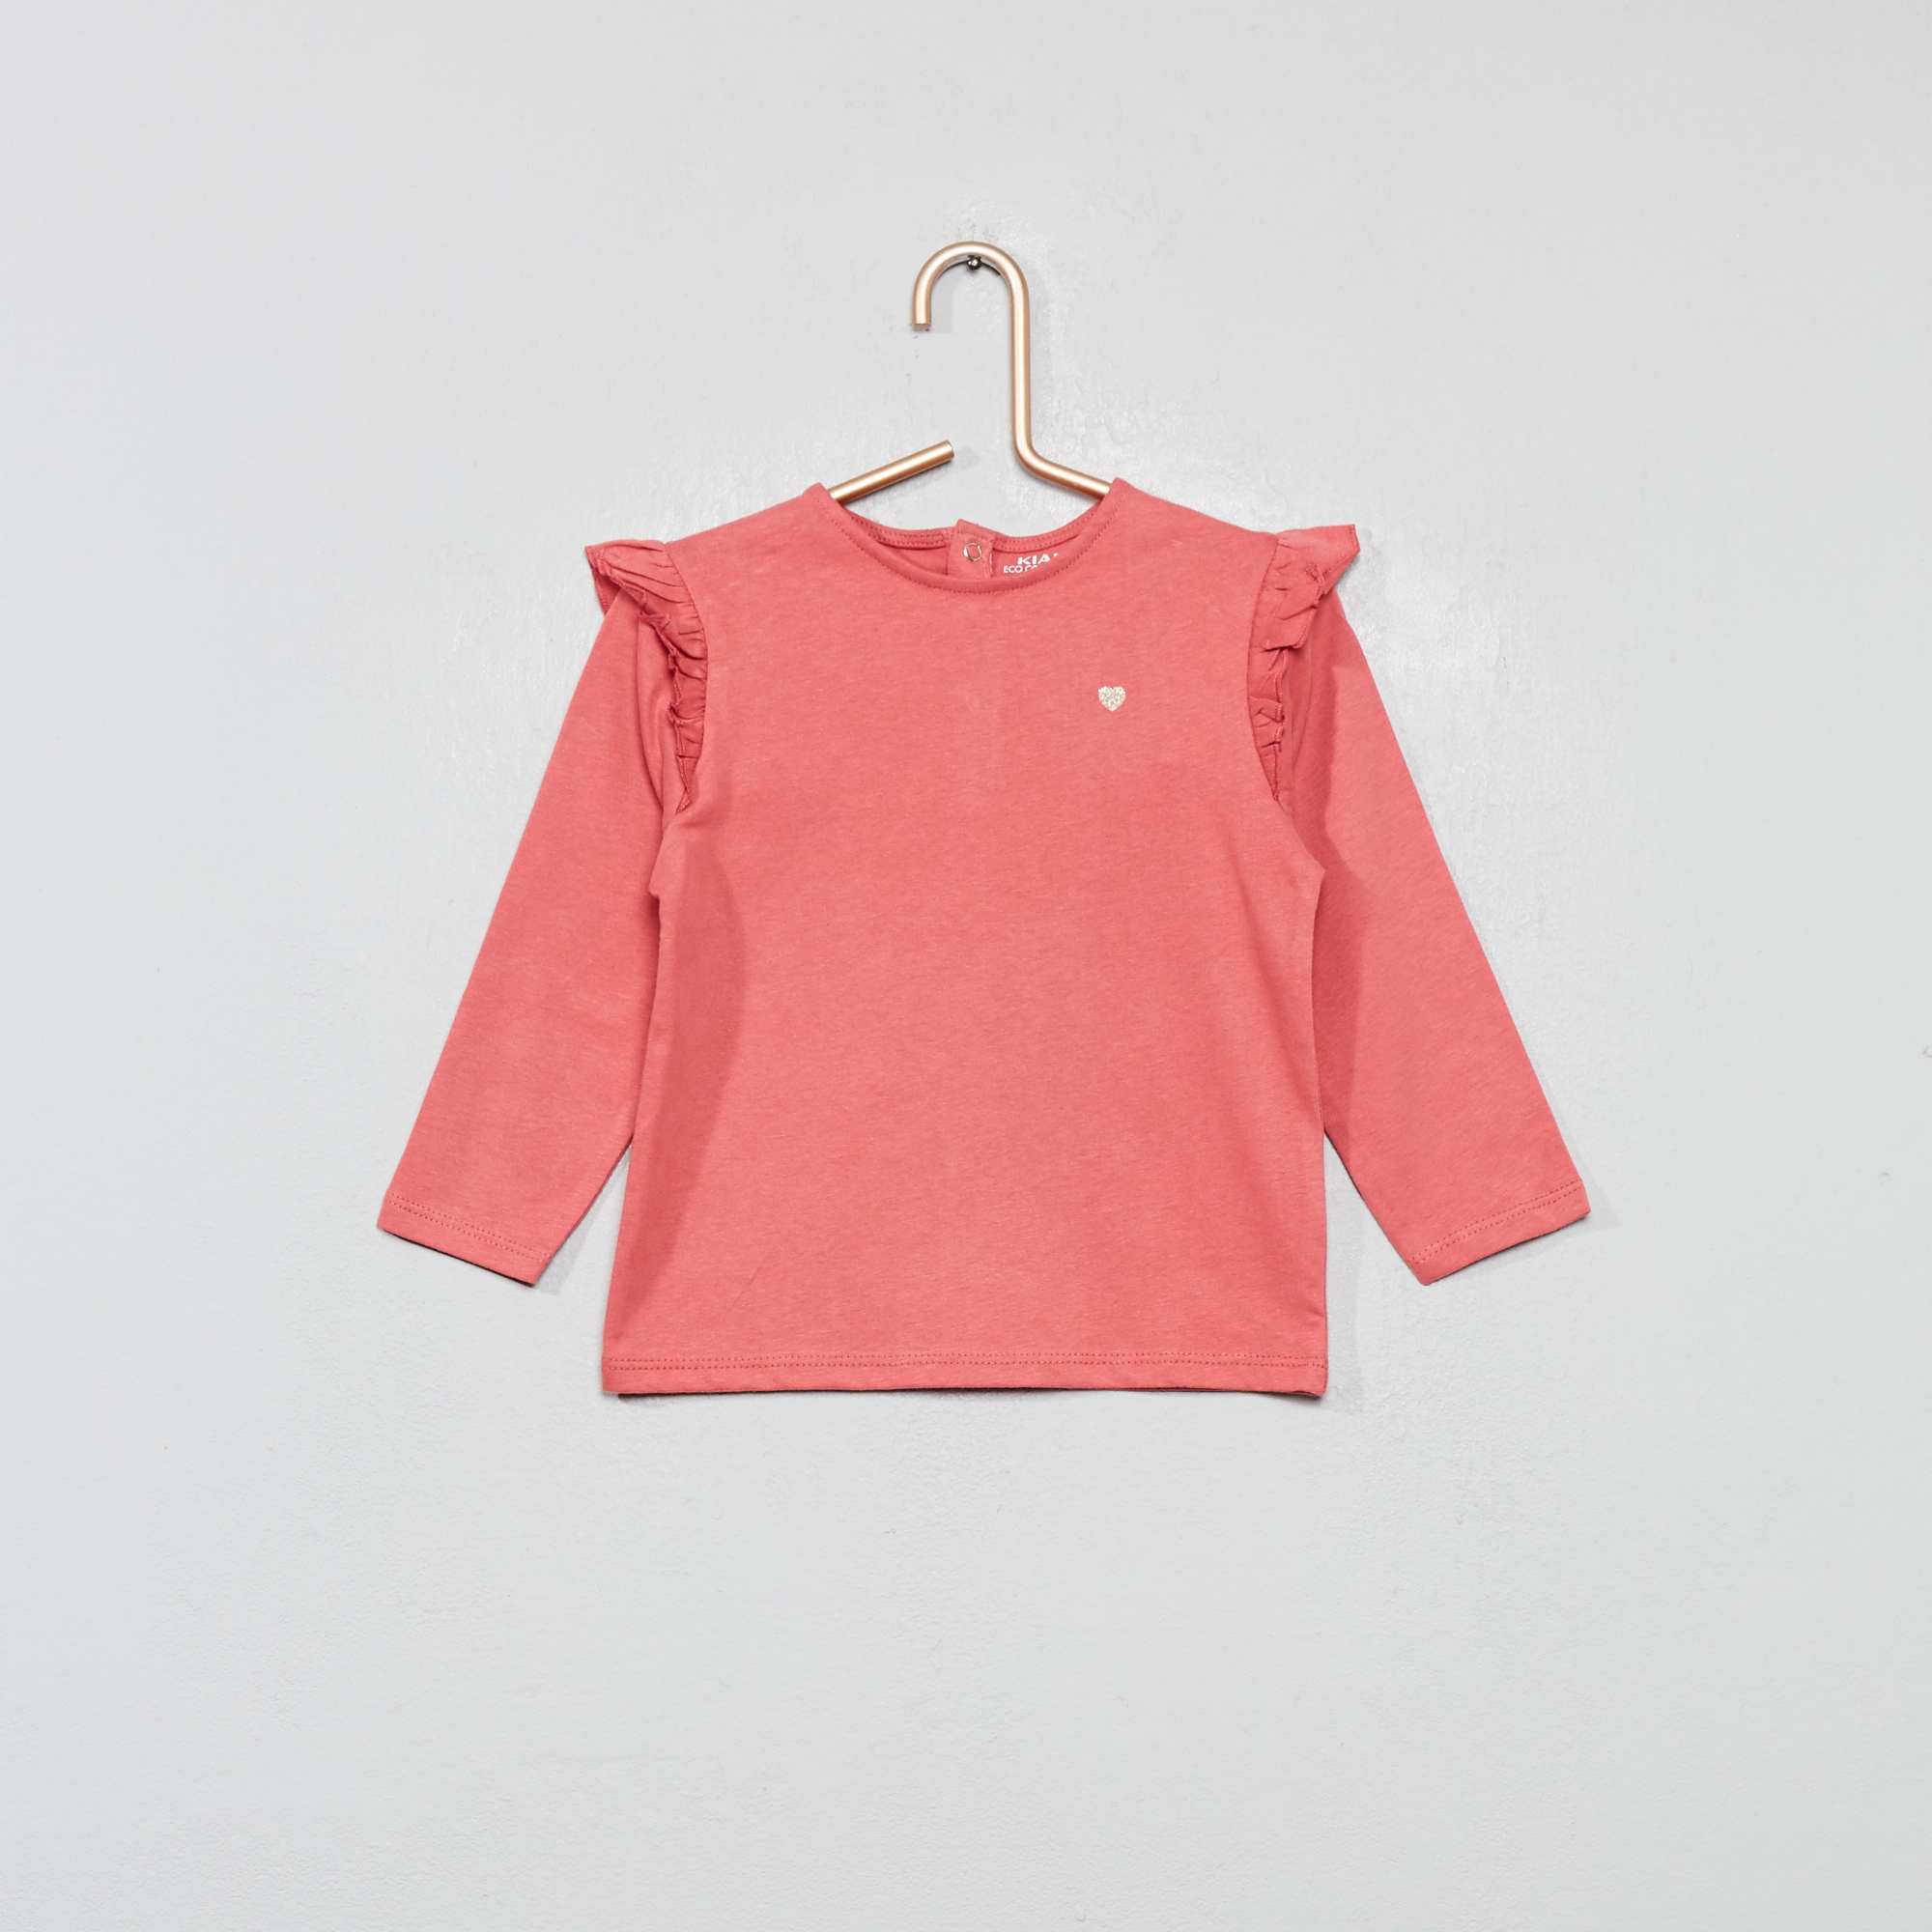 Camiseta Con Volantes Bebé Niña Rosa Kiabi 300€